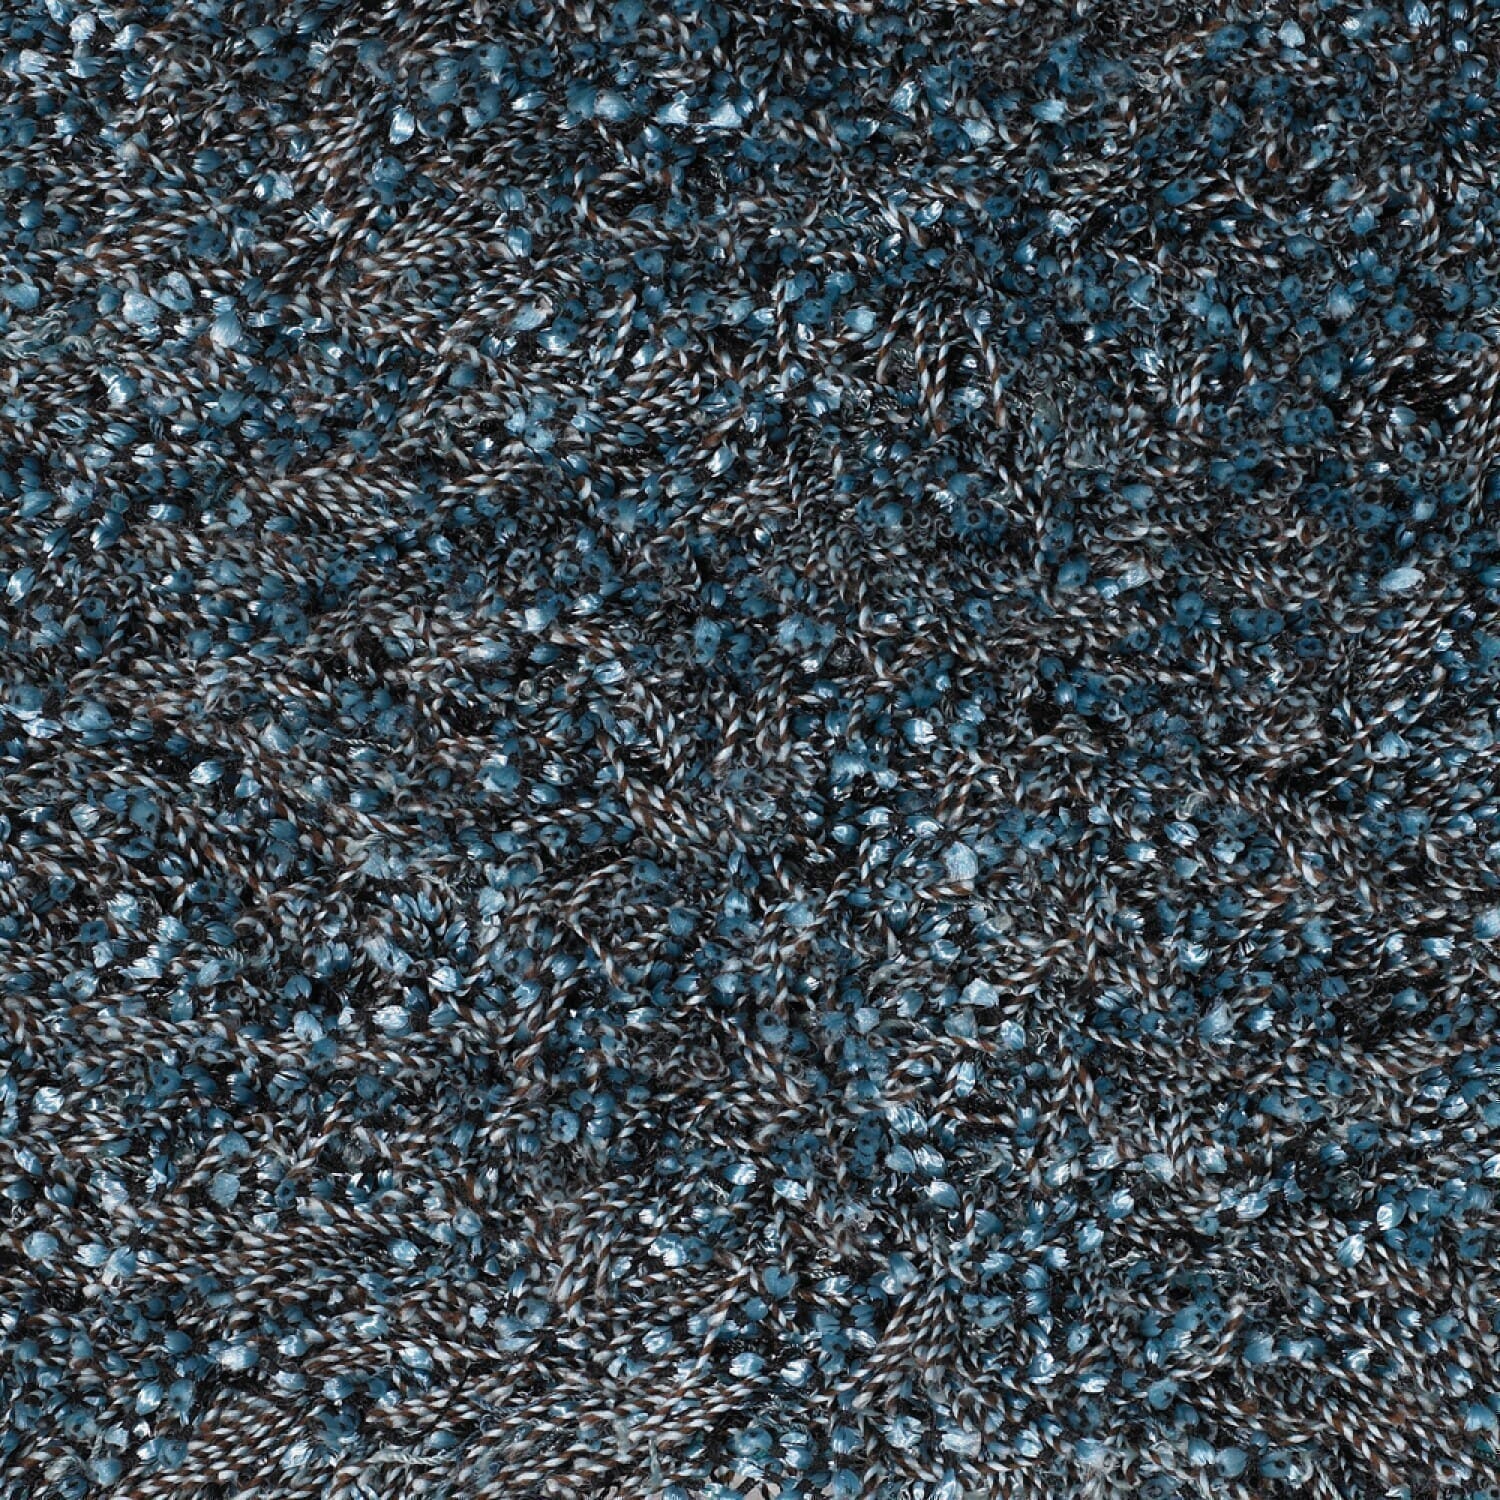 Chandra Mai mai14202 Blue Shag Area Rug